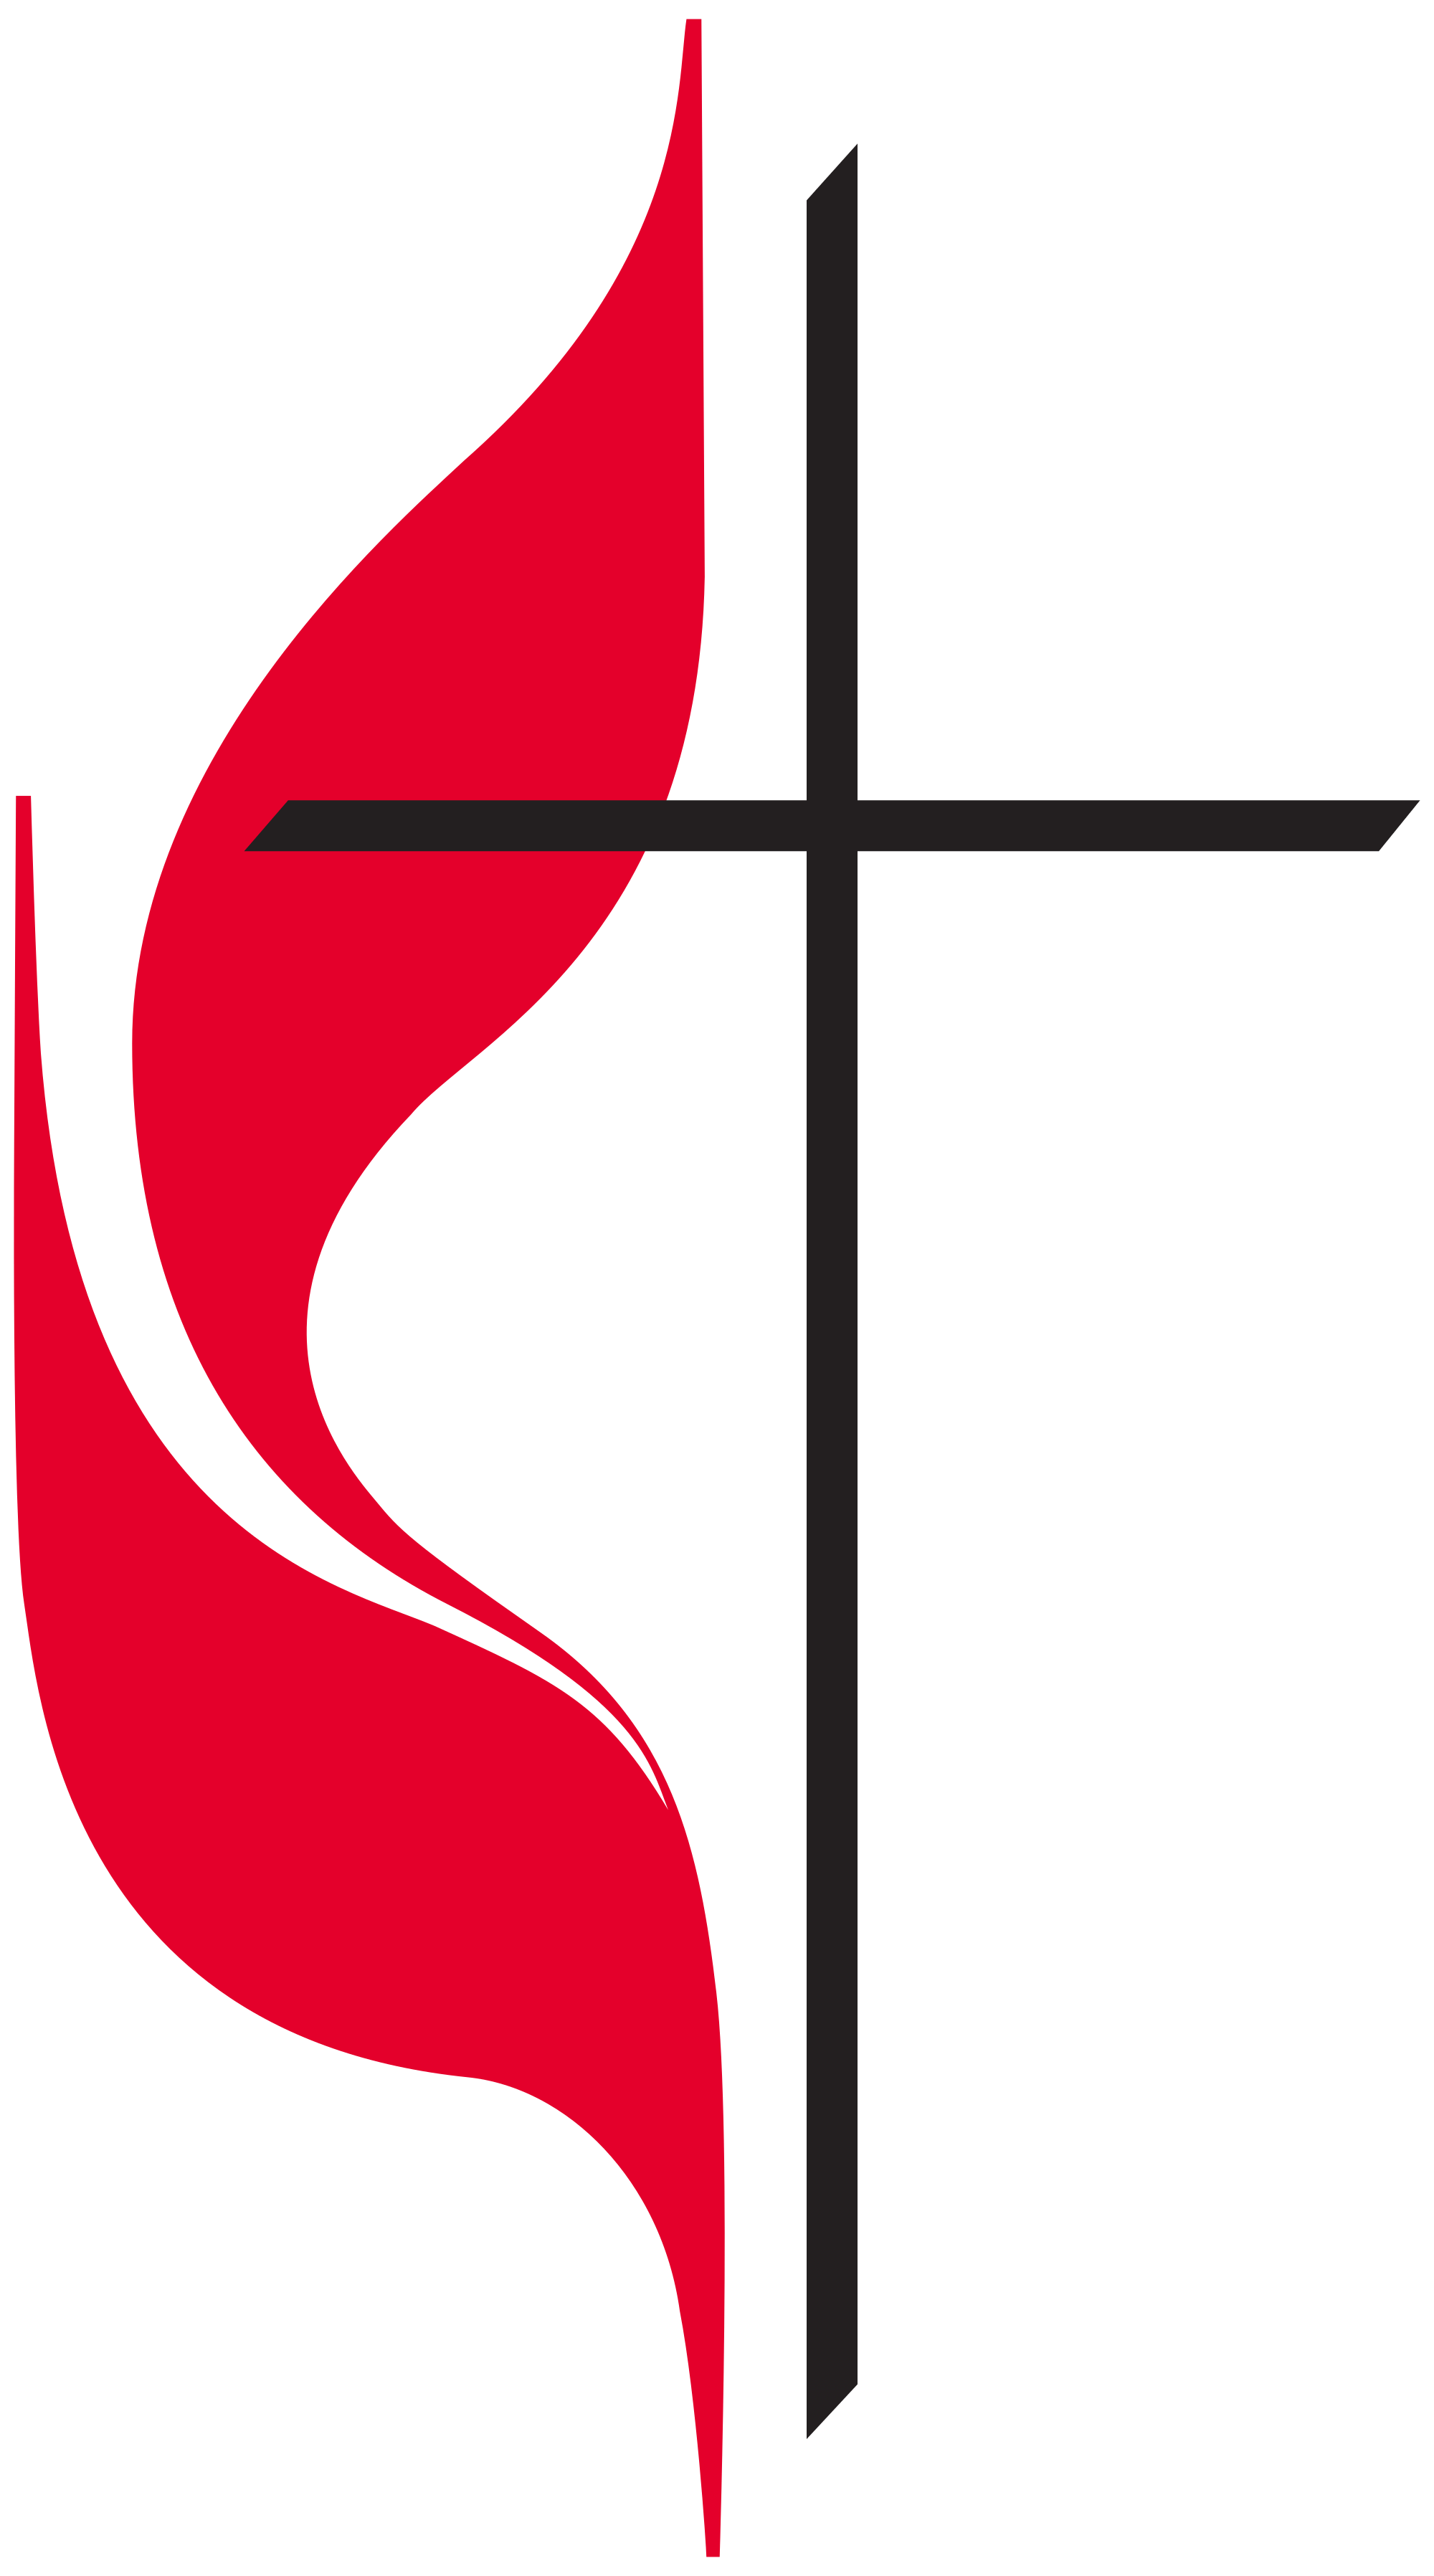 Church Cross Logo - Cross and flame